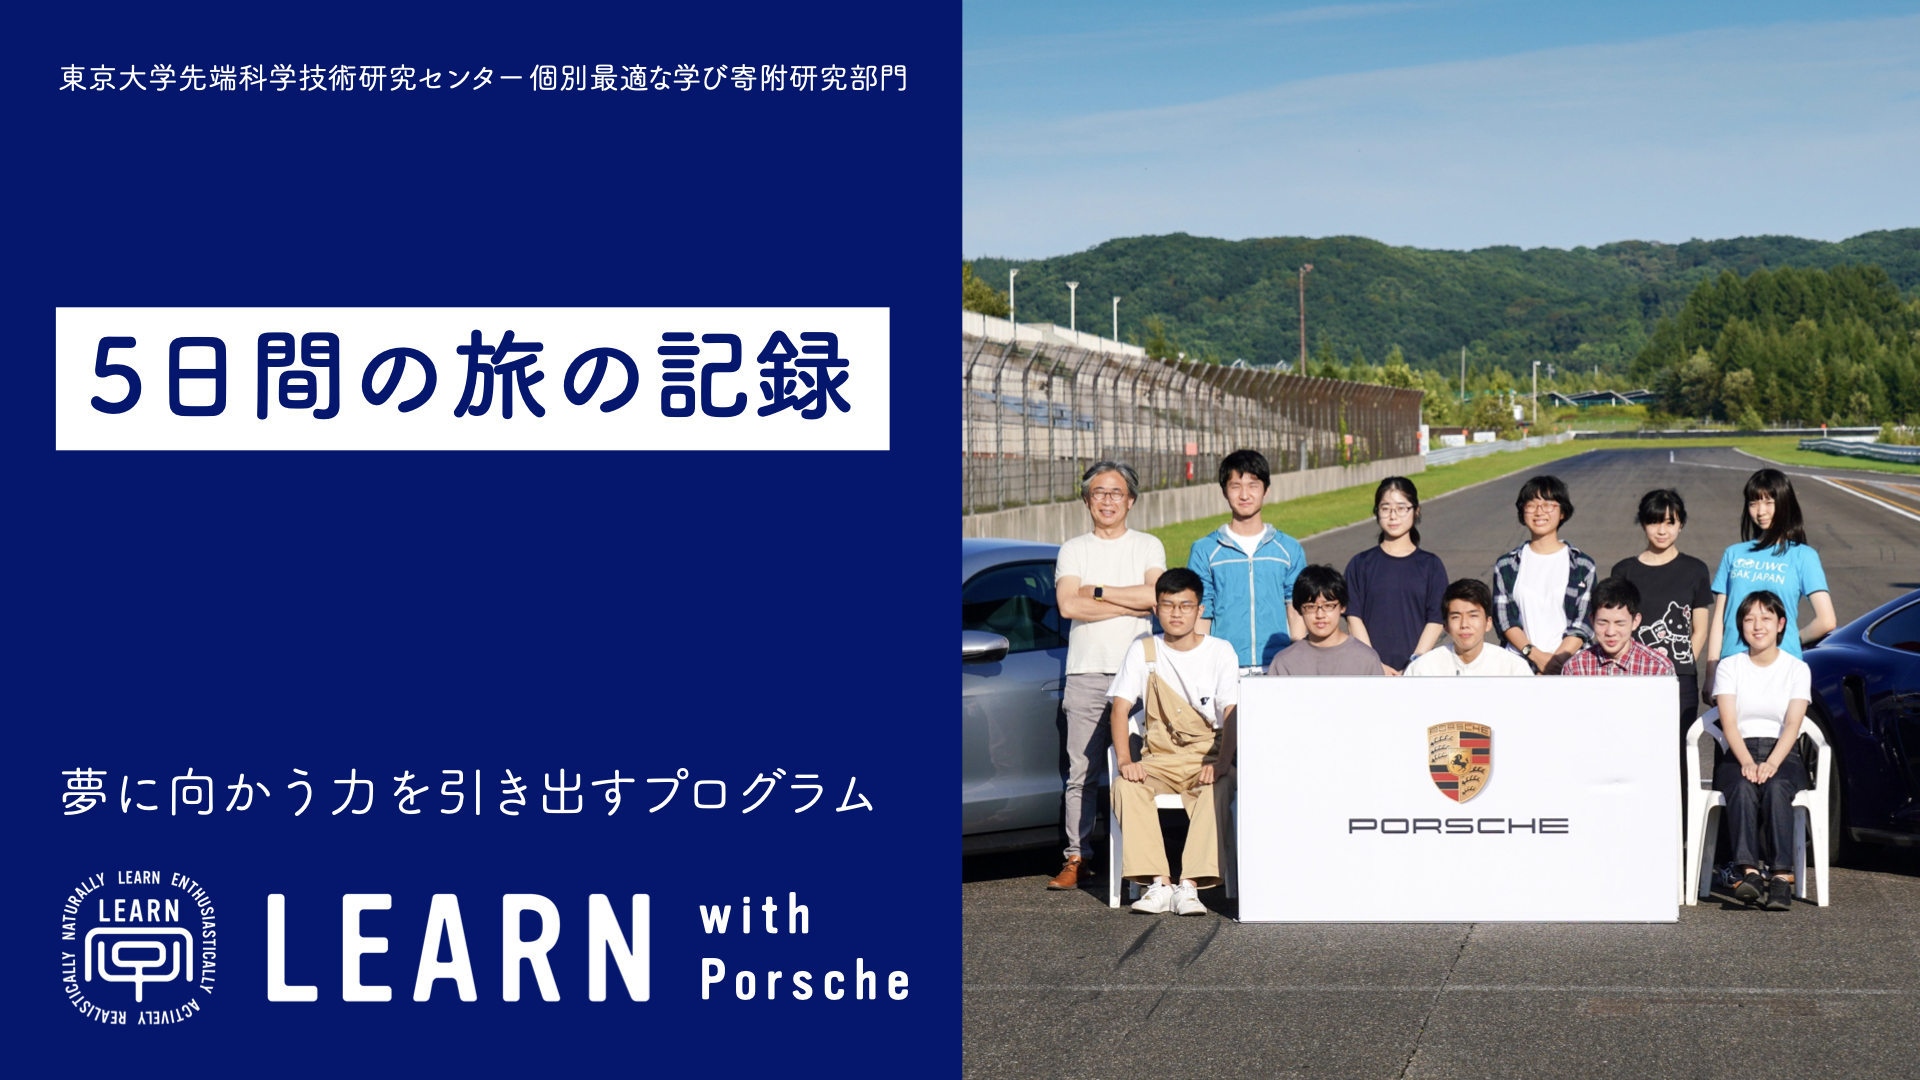 LEARN with Porsche 2021 ＠北海道『夢に向かう力を引き出すプログラム』